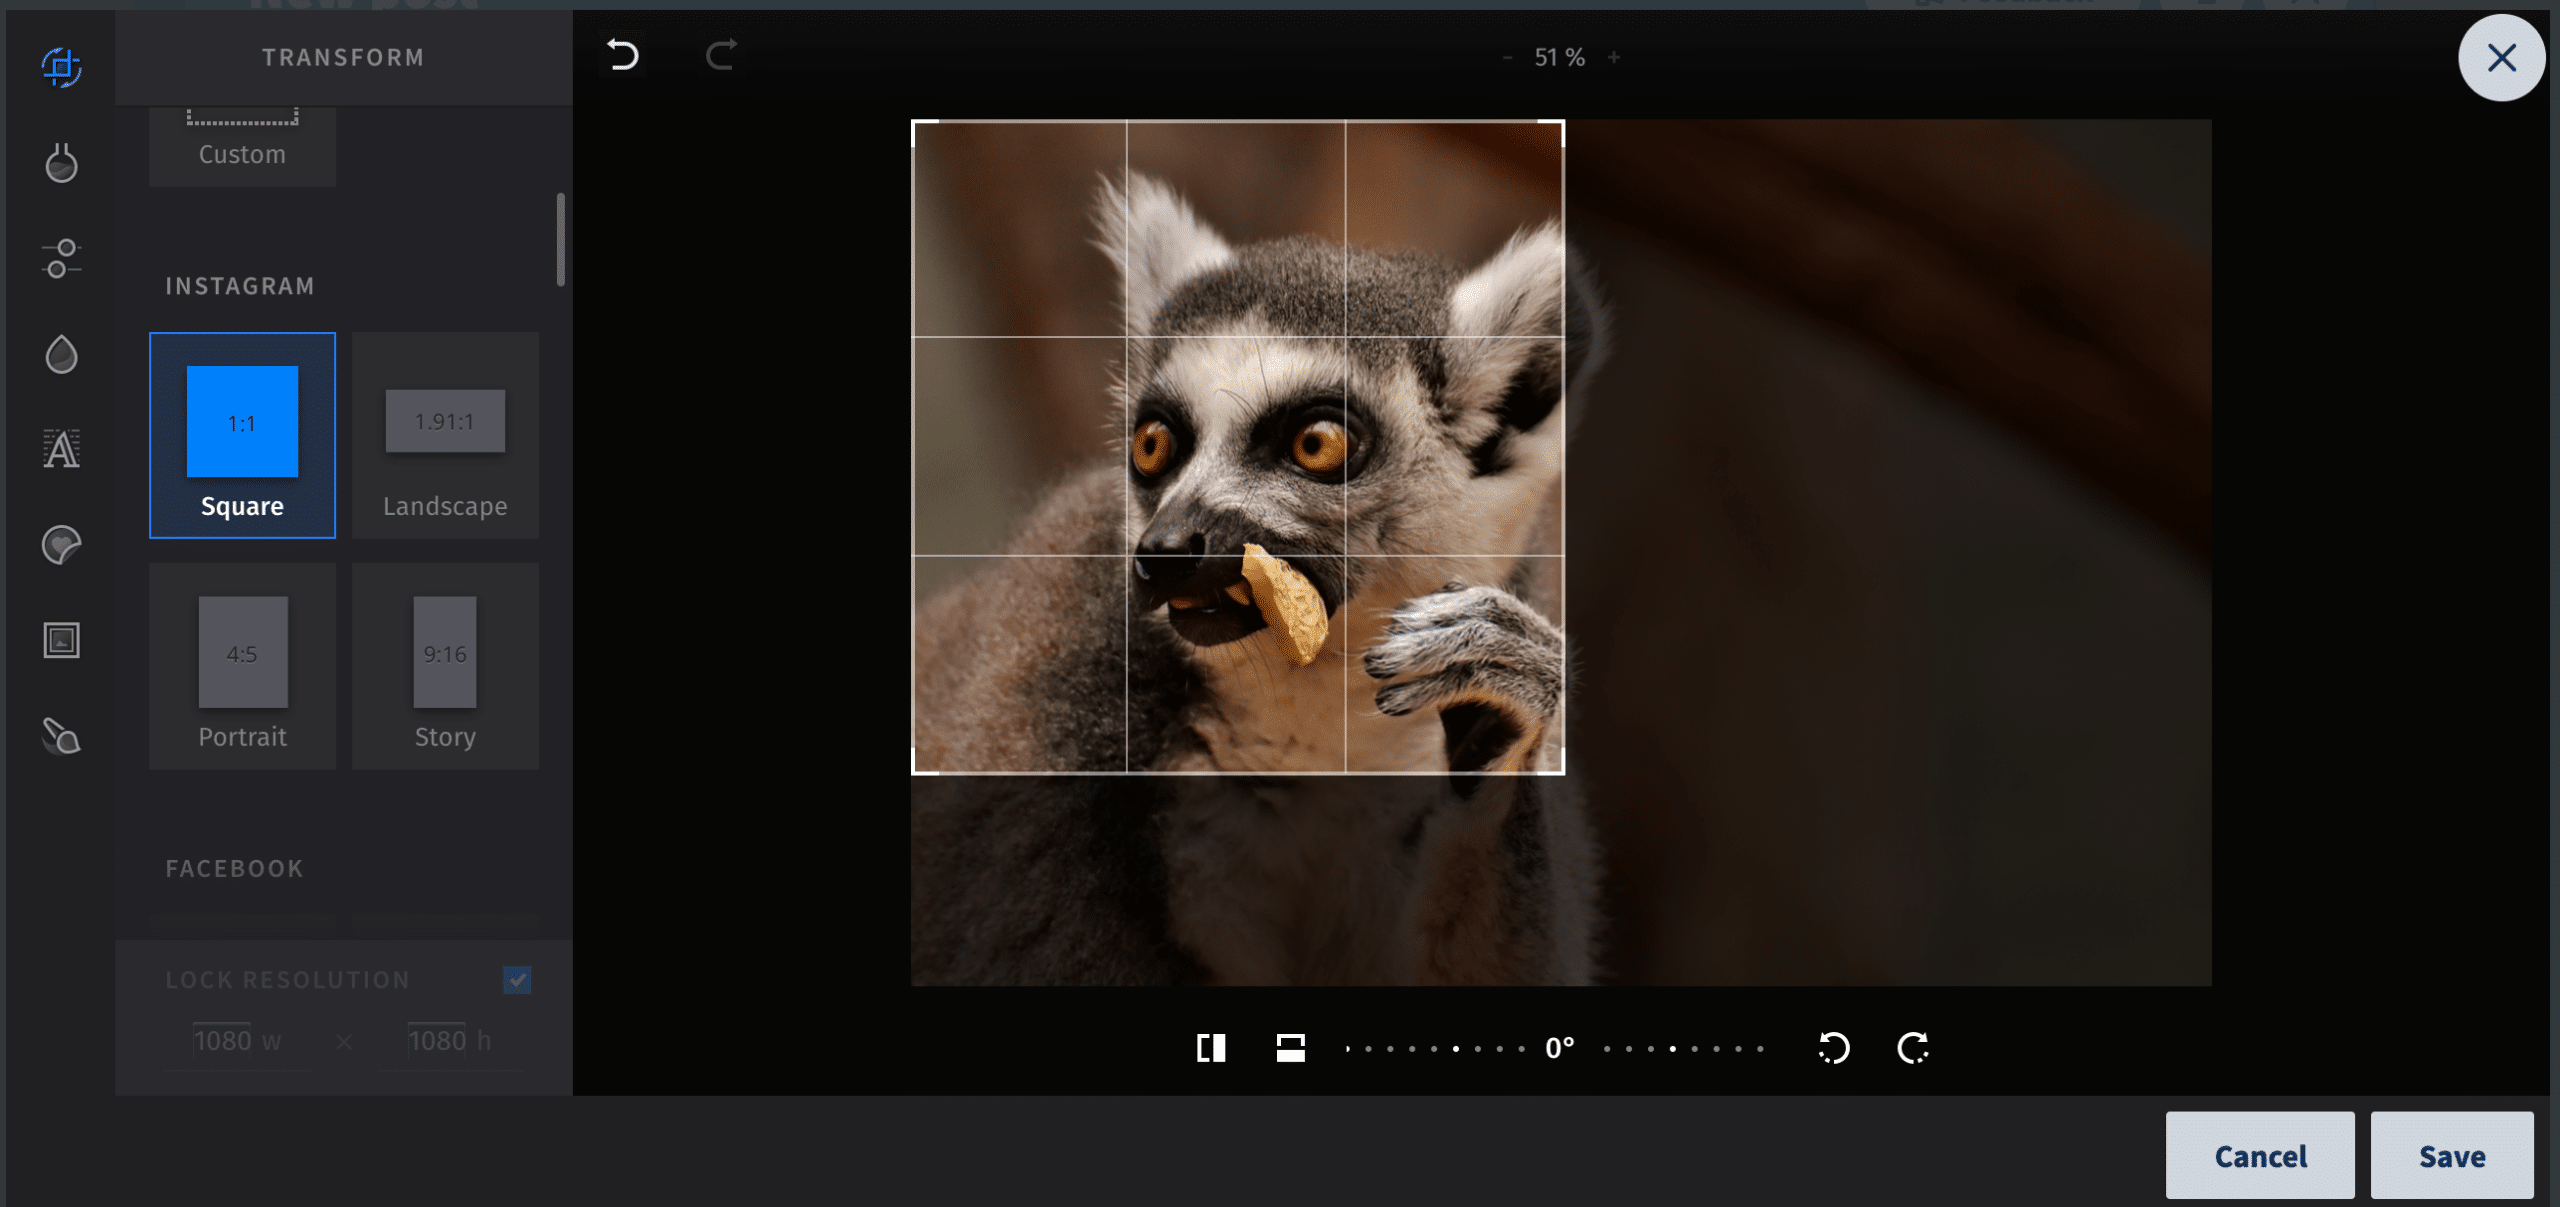 up close shot of a lemur